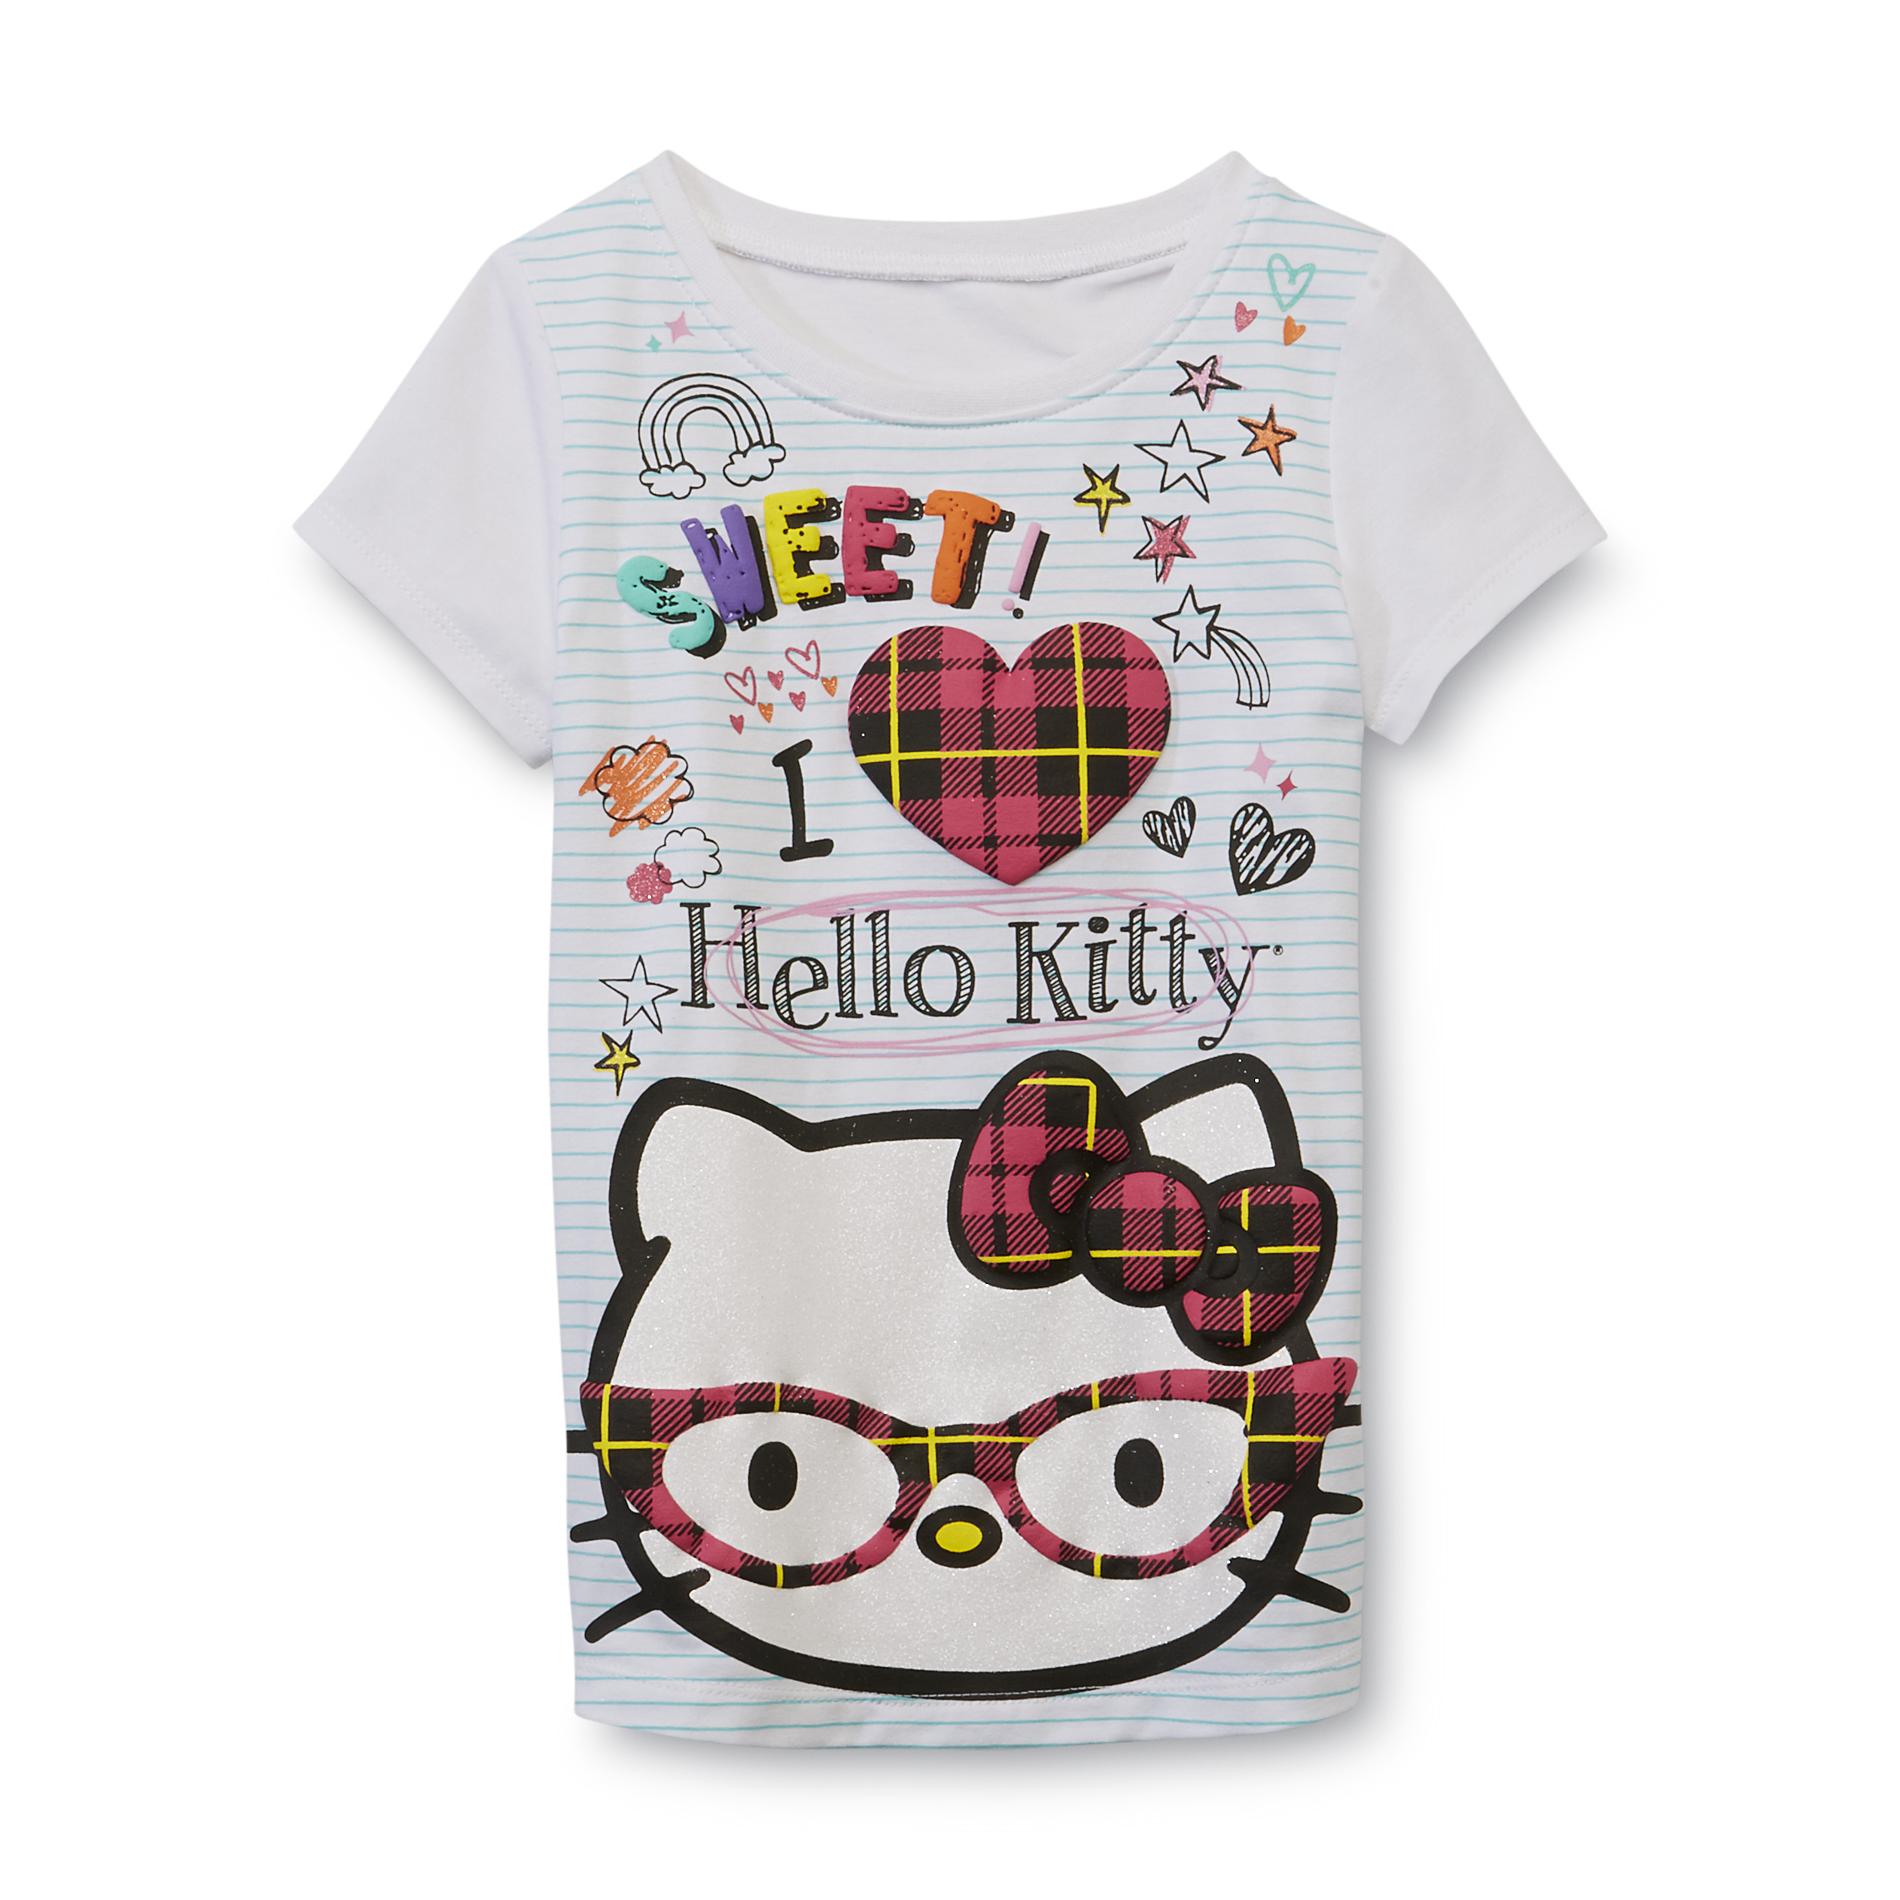 Hello Kitty Girl's Short-Sleeve Top - Doodles